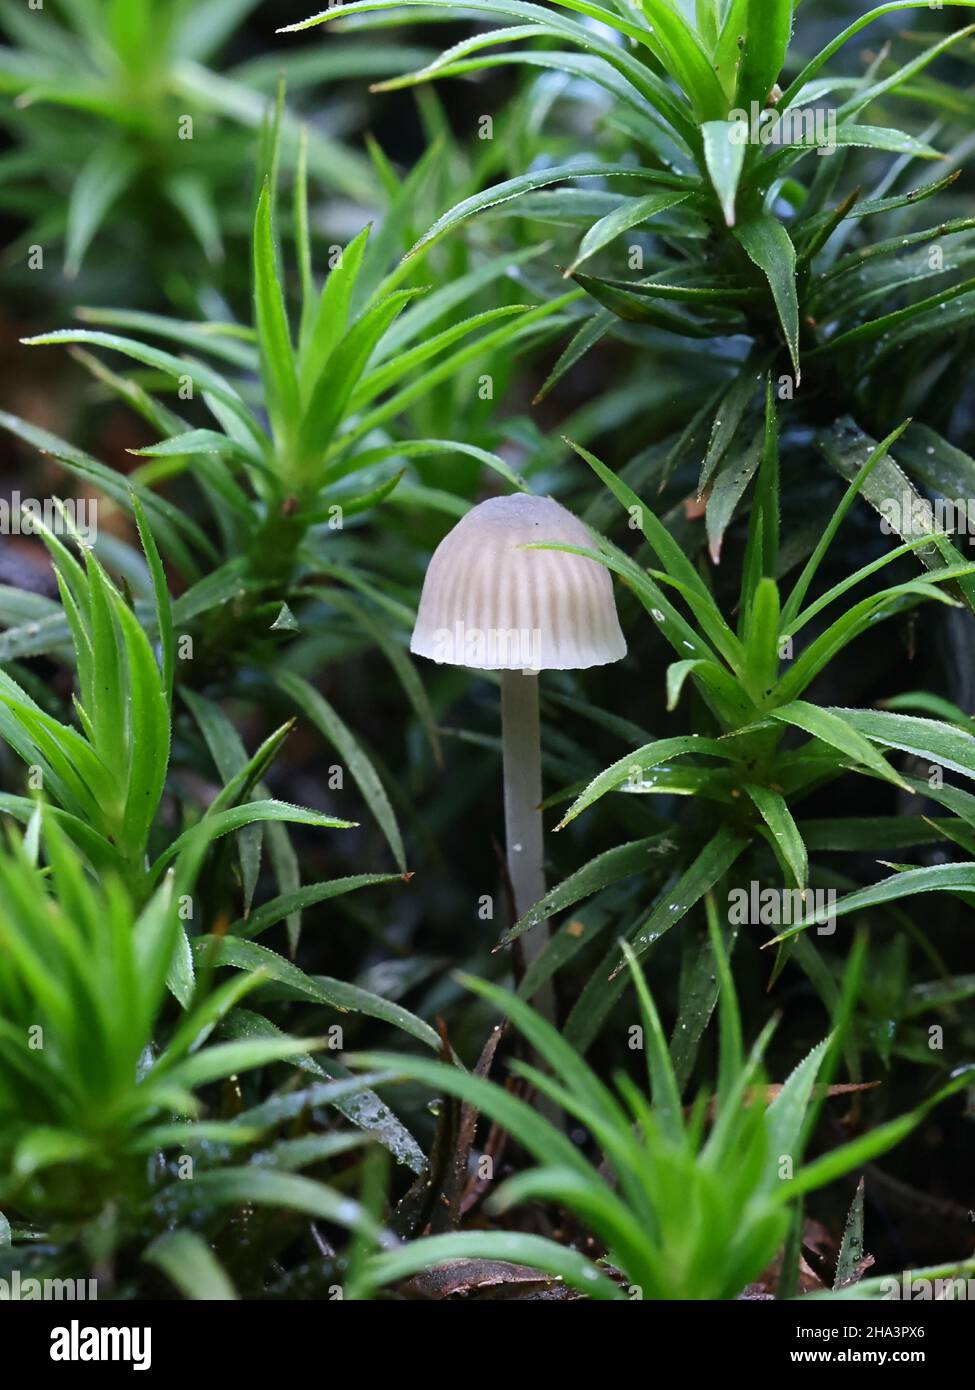 Phloeomana hiemalis, also called Mycena hiemalis, commonly known as Winter bonnet, wild mushroom from Finland Stock Photo